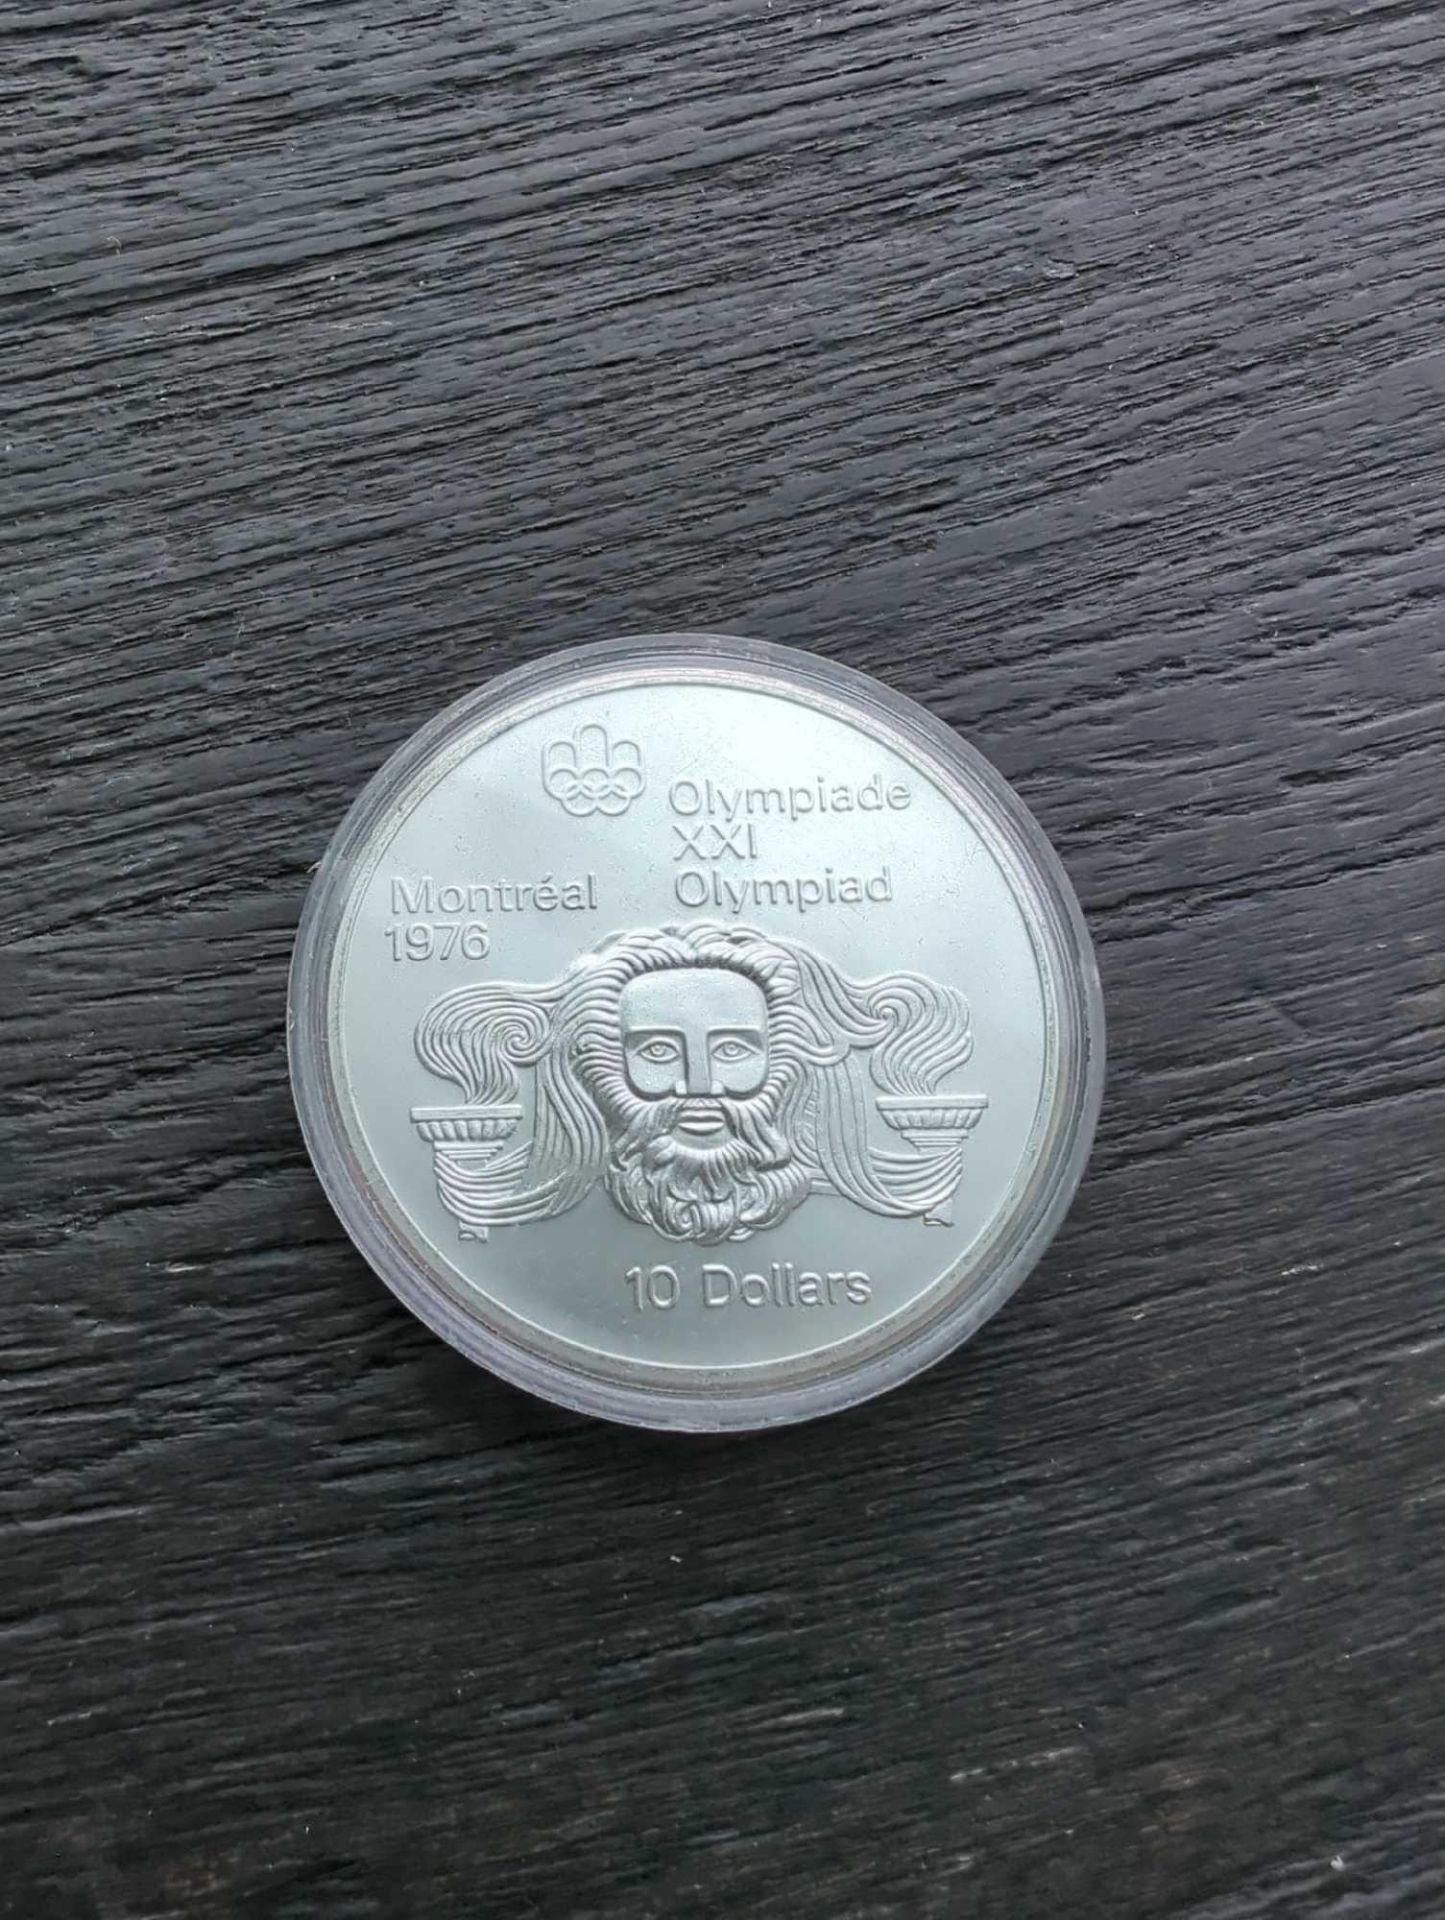 1974 Canada Queen Elizabeth Olympics Silver 10 Dollar Coin - Image 2 of 2